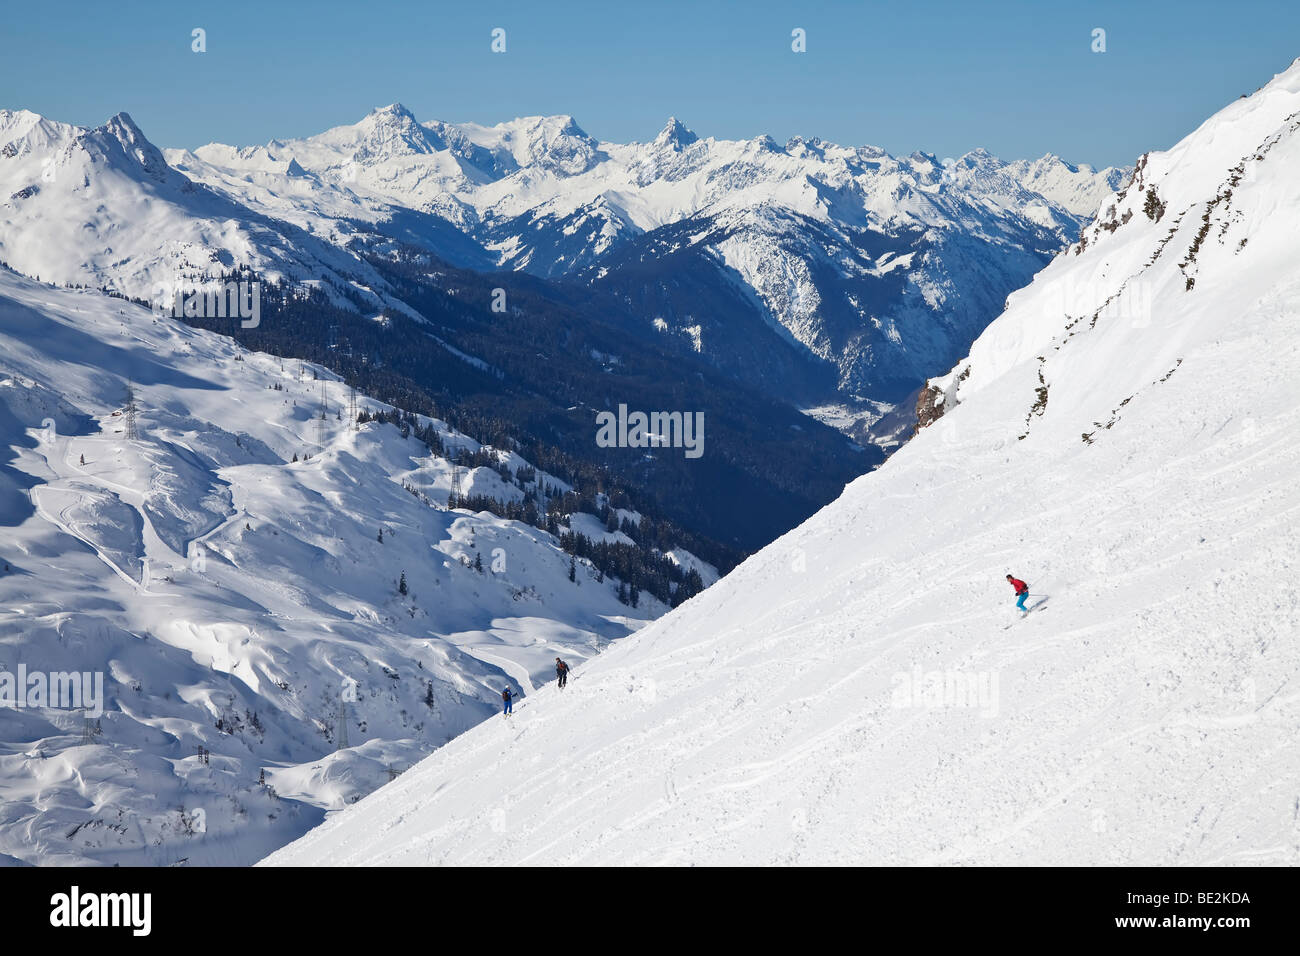 Europe, Austria, Tirol. St. Anton am Arlberg, resort pistes and mountain ranges Stock Photo